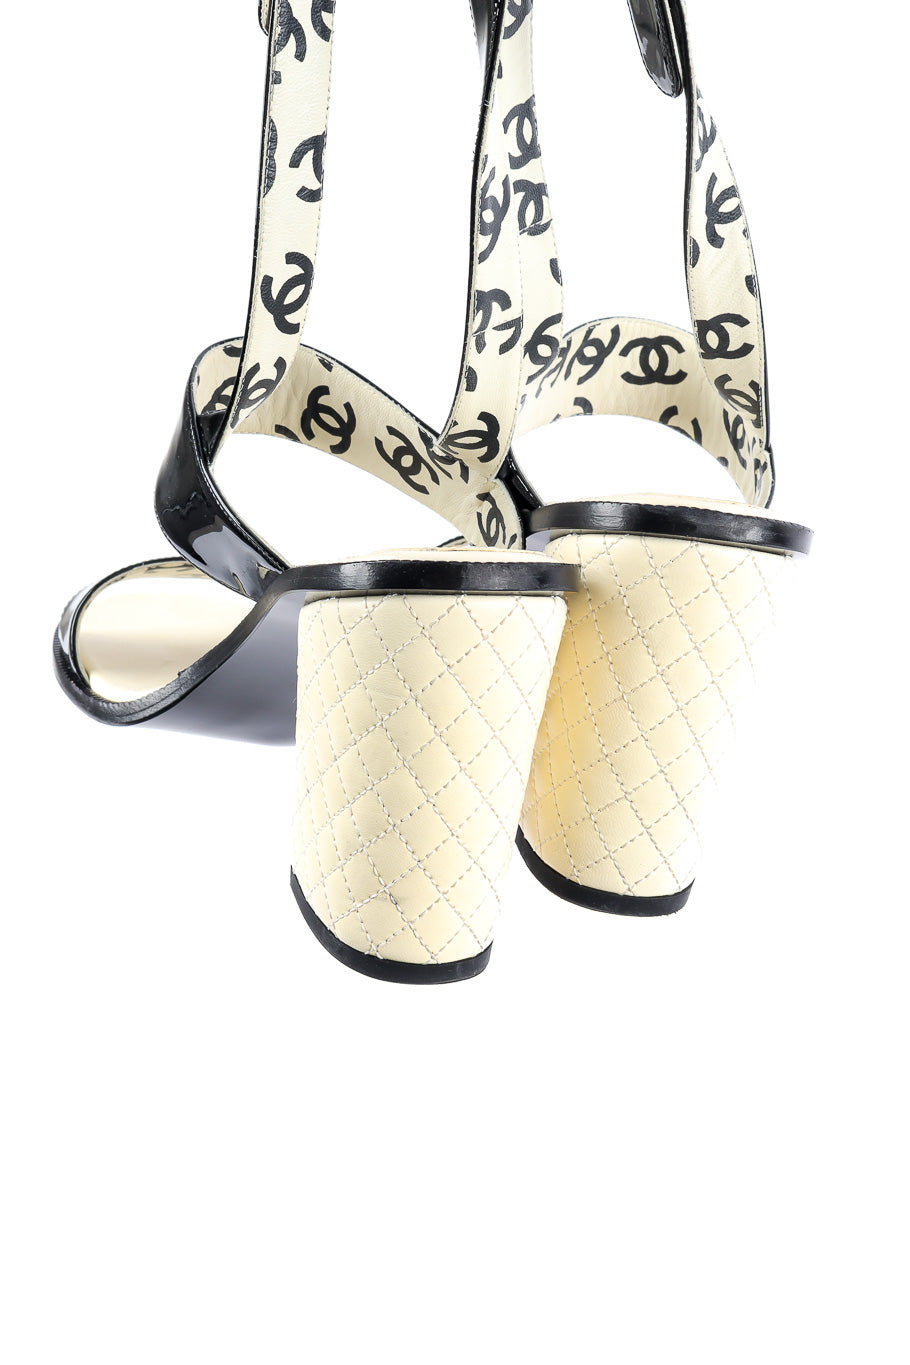 Chanel patent leather wrap sandal back of heel detail @recessla